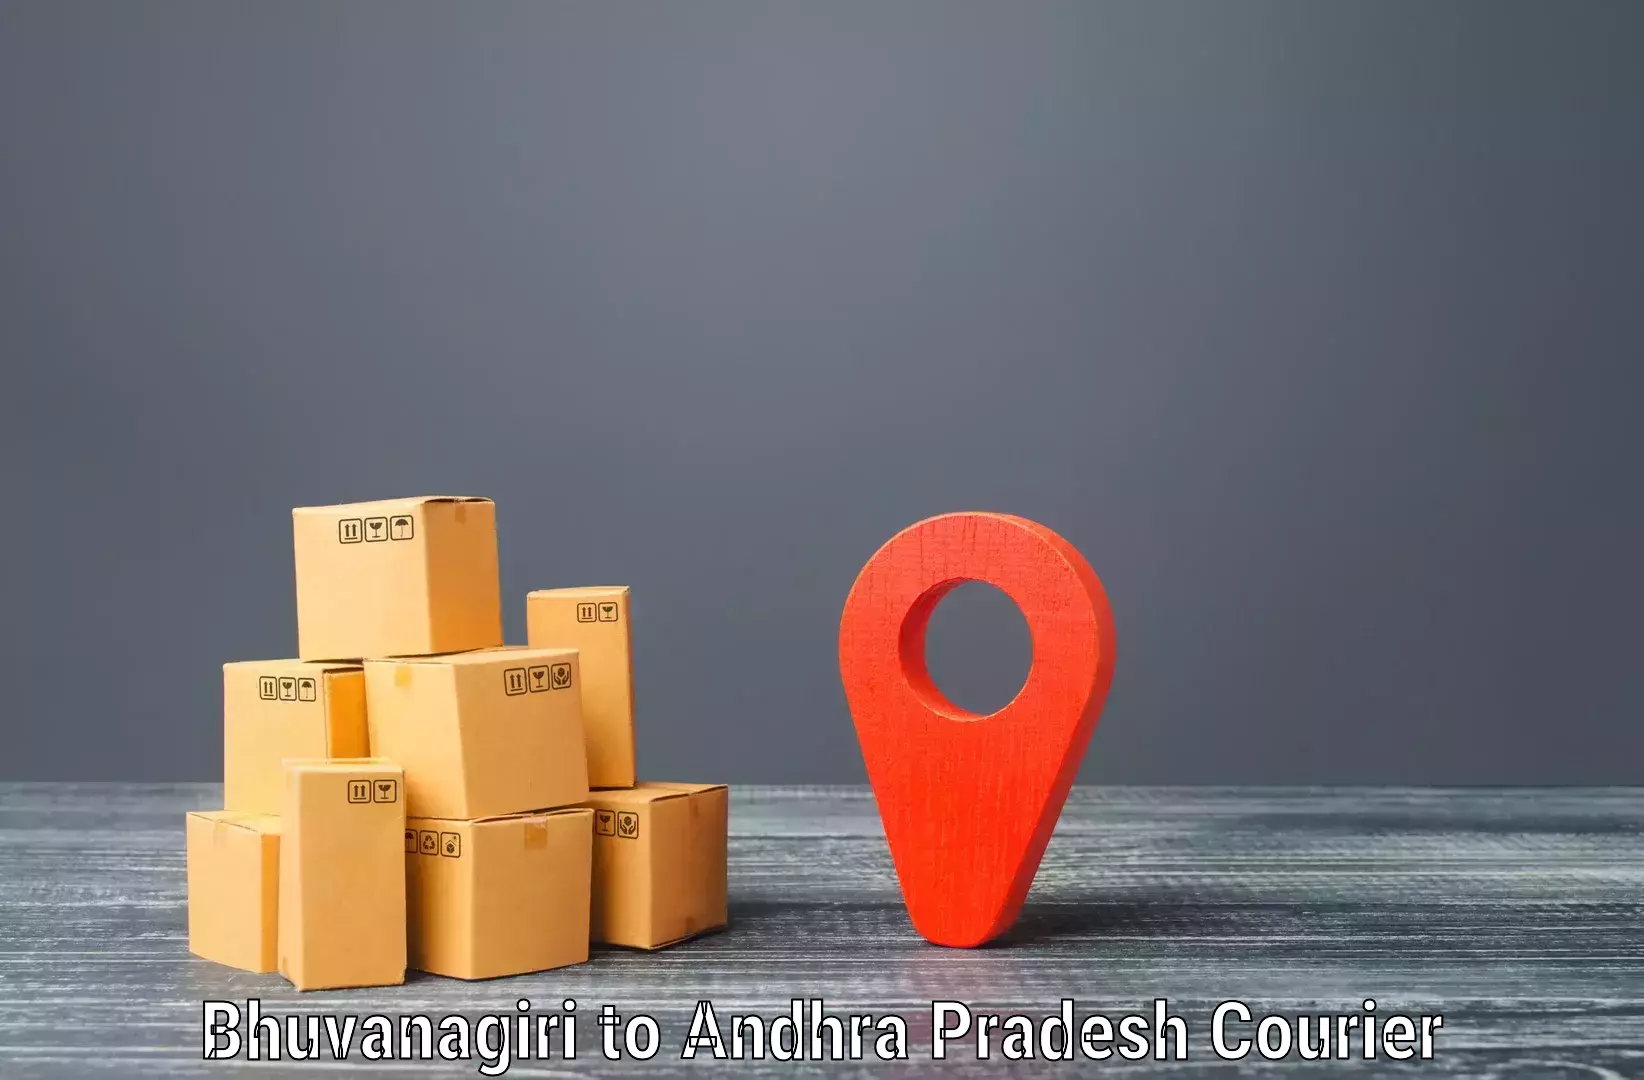 Cargo delivery service Bhuvanagiri to Mudigubba